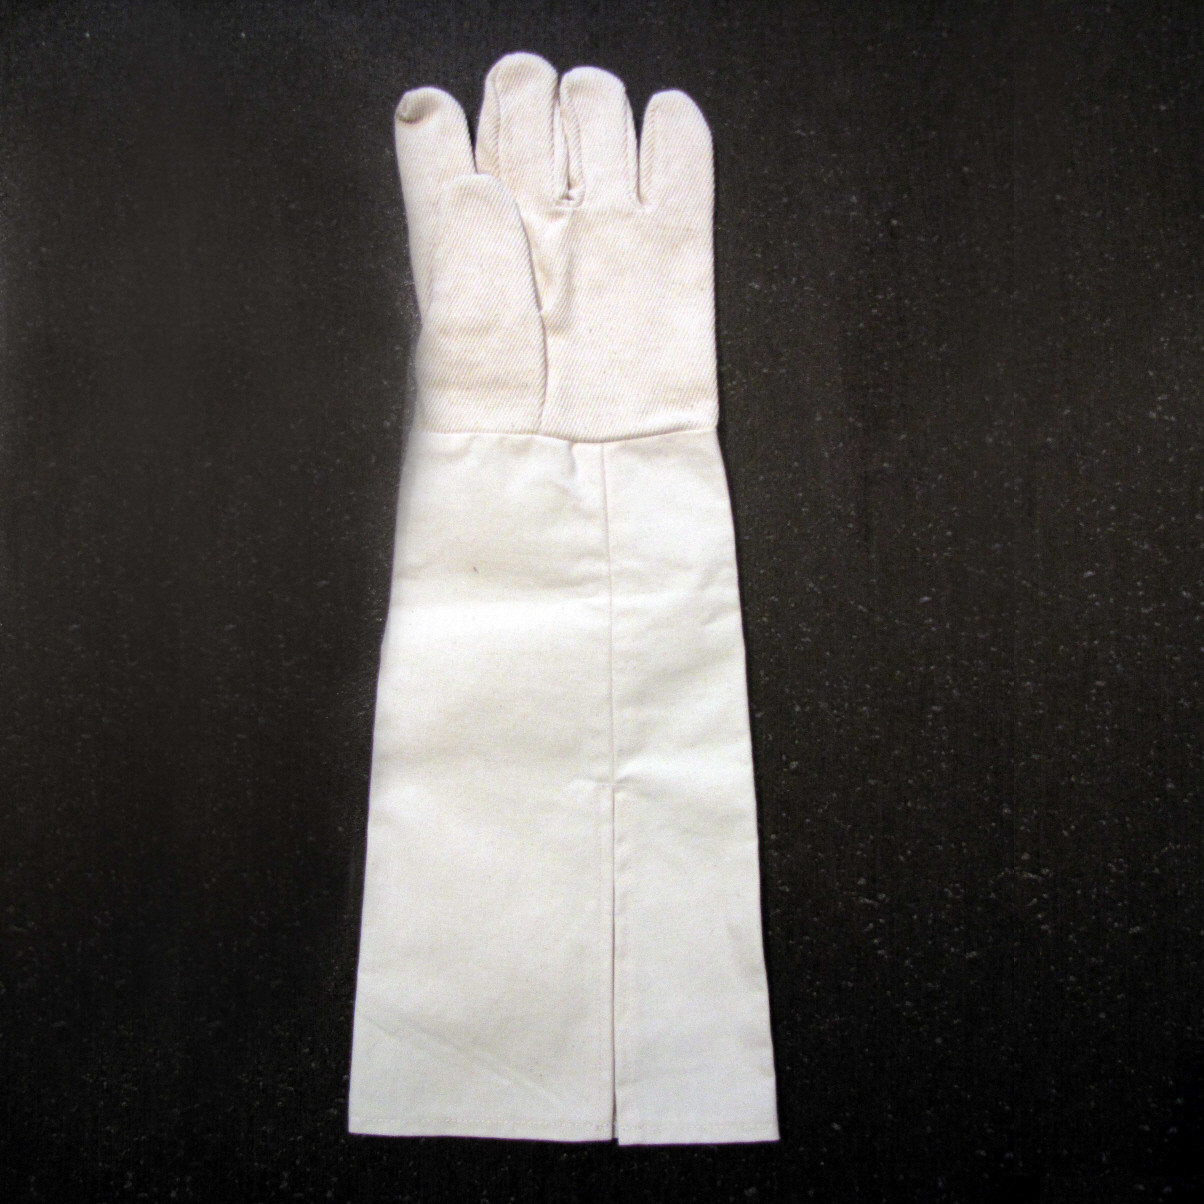 Single left hand Glove (Bird Arm Illusion)